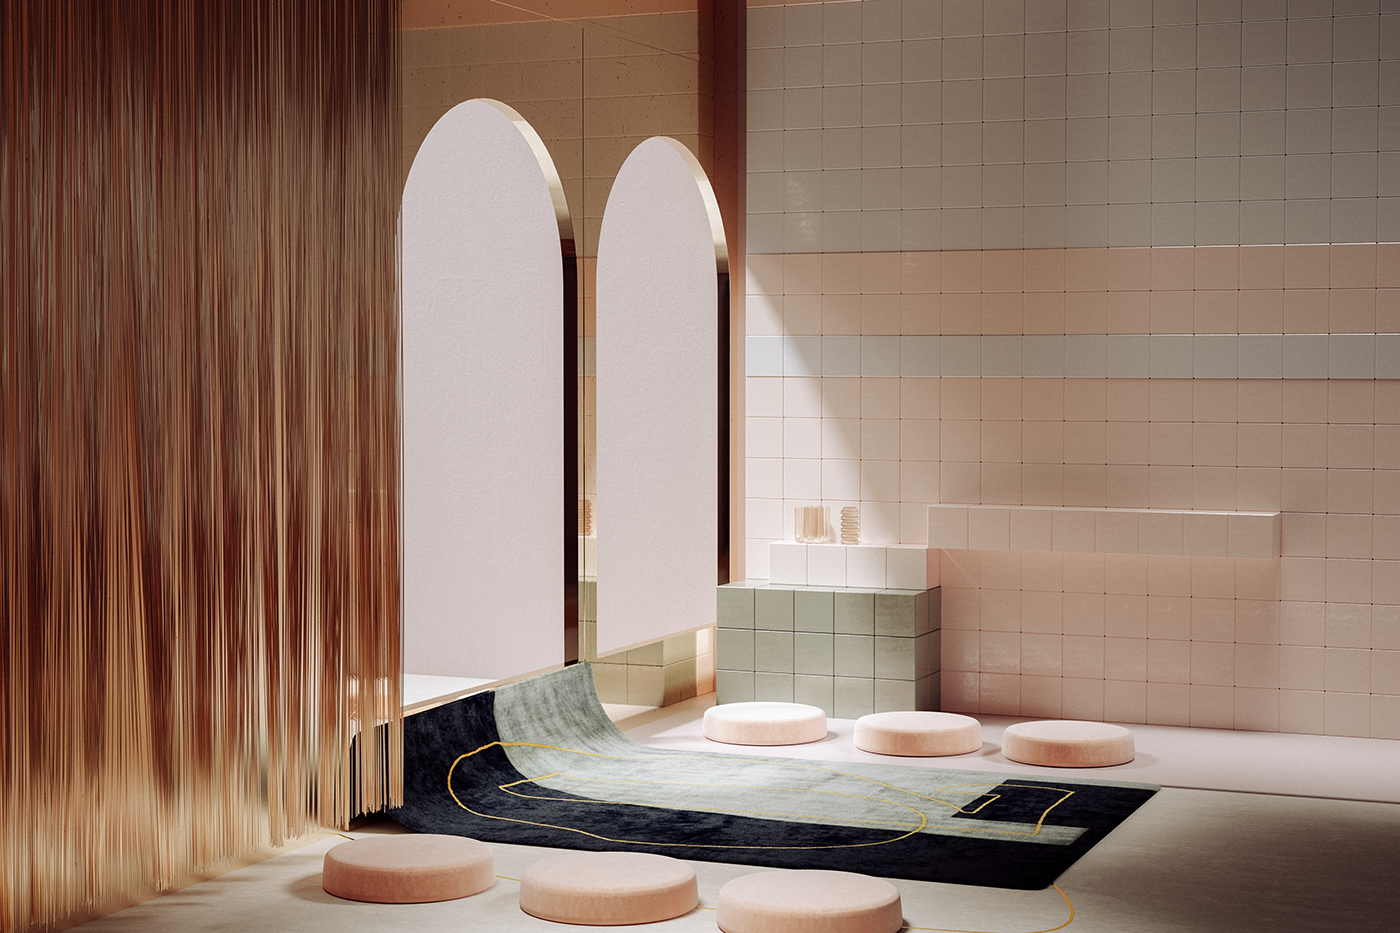 New York Alex Proba studio proba reisinger rugs explorations Interior set design 